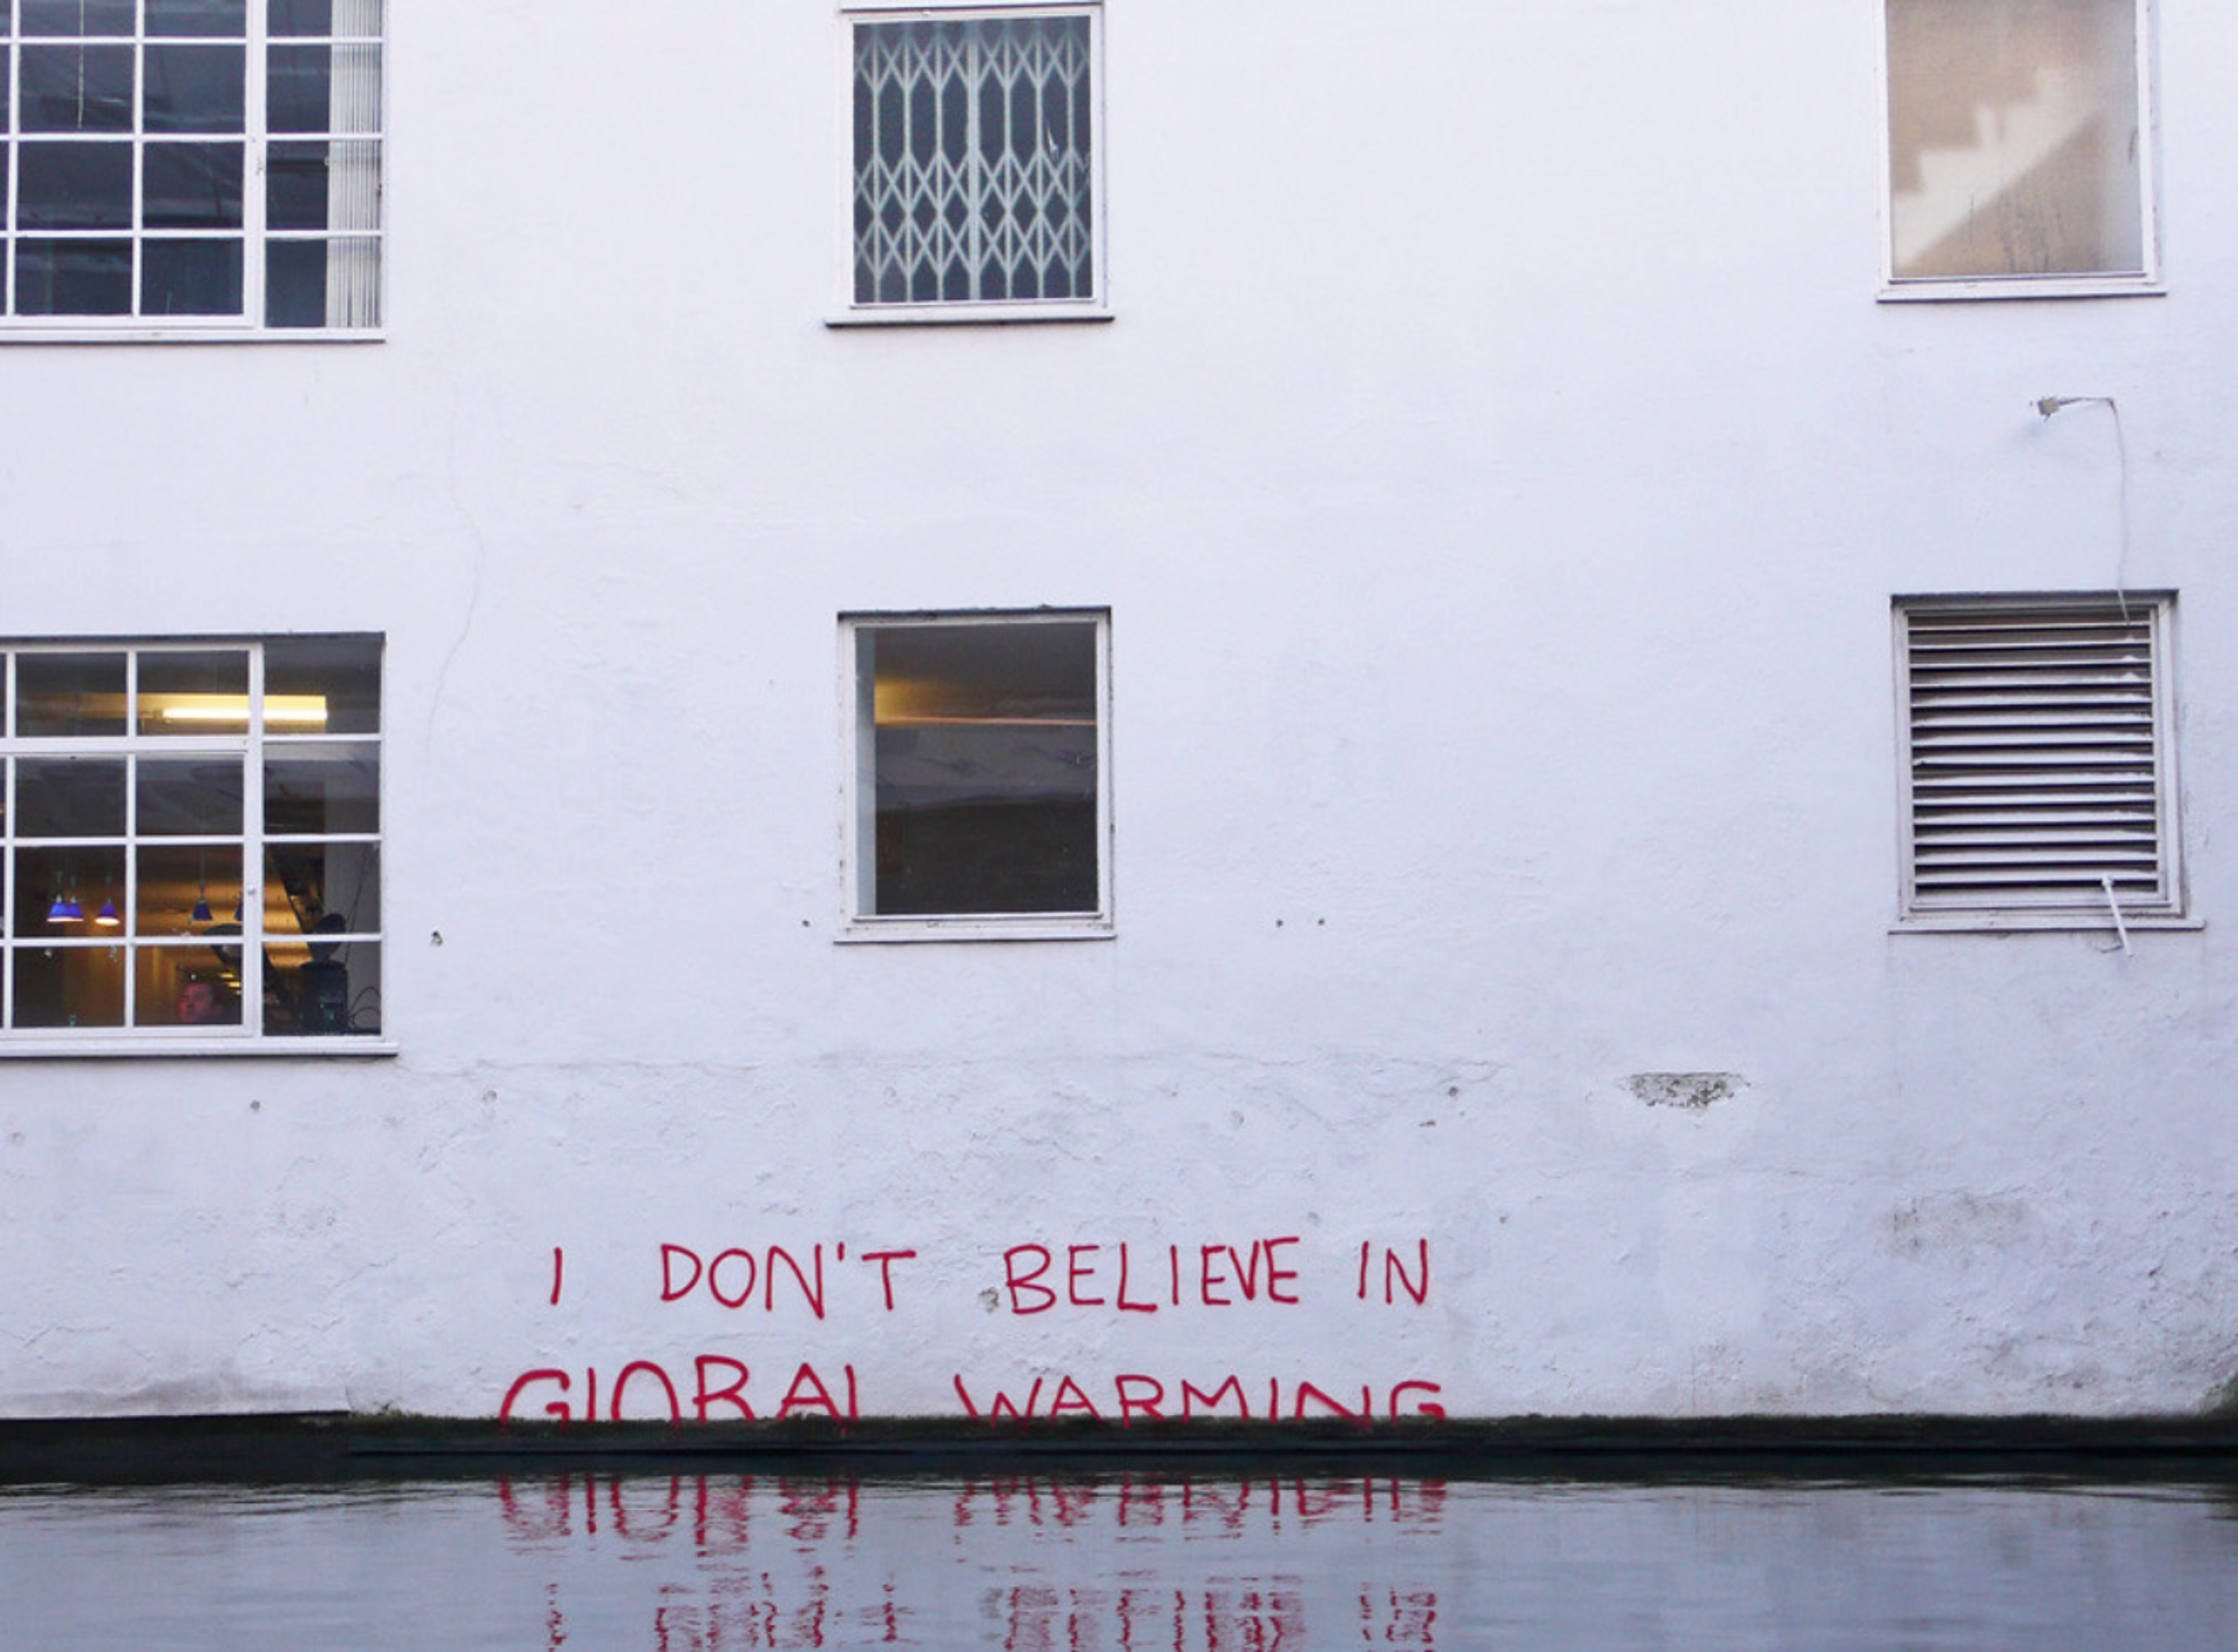 I don't believe in Global Warming by Banksy